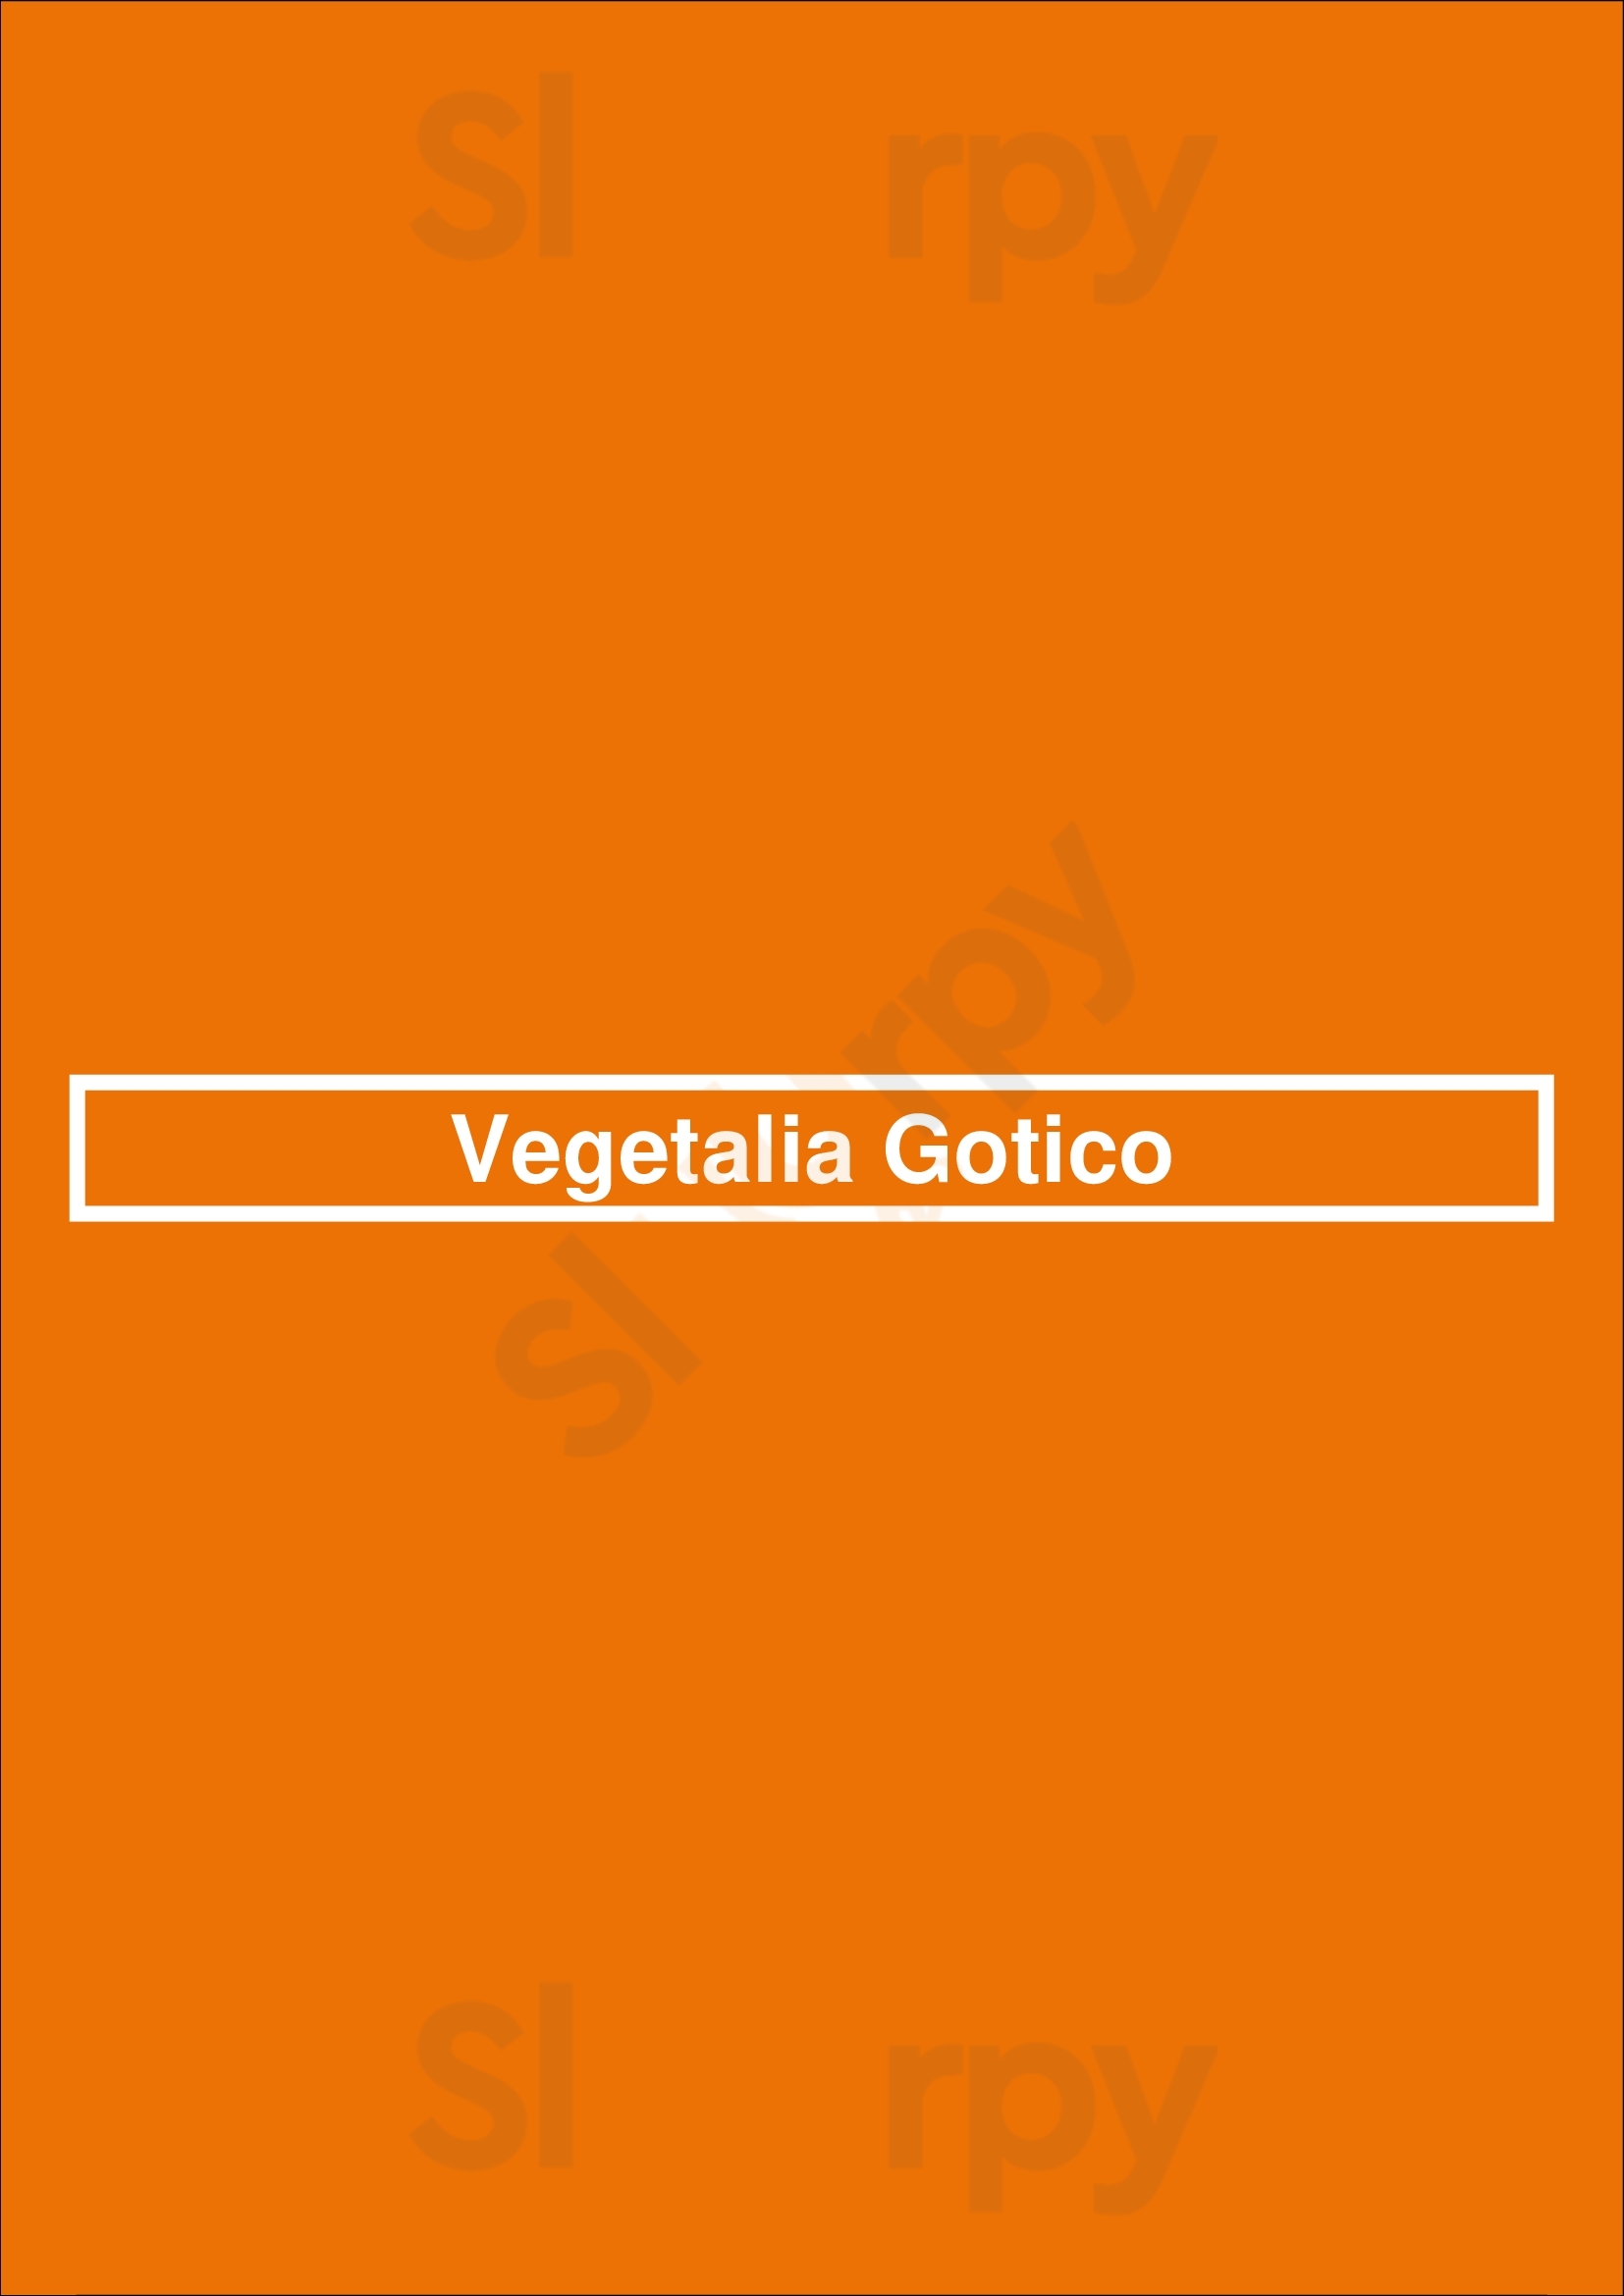 Vegetalia Gotico Barcelona Menu - 1